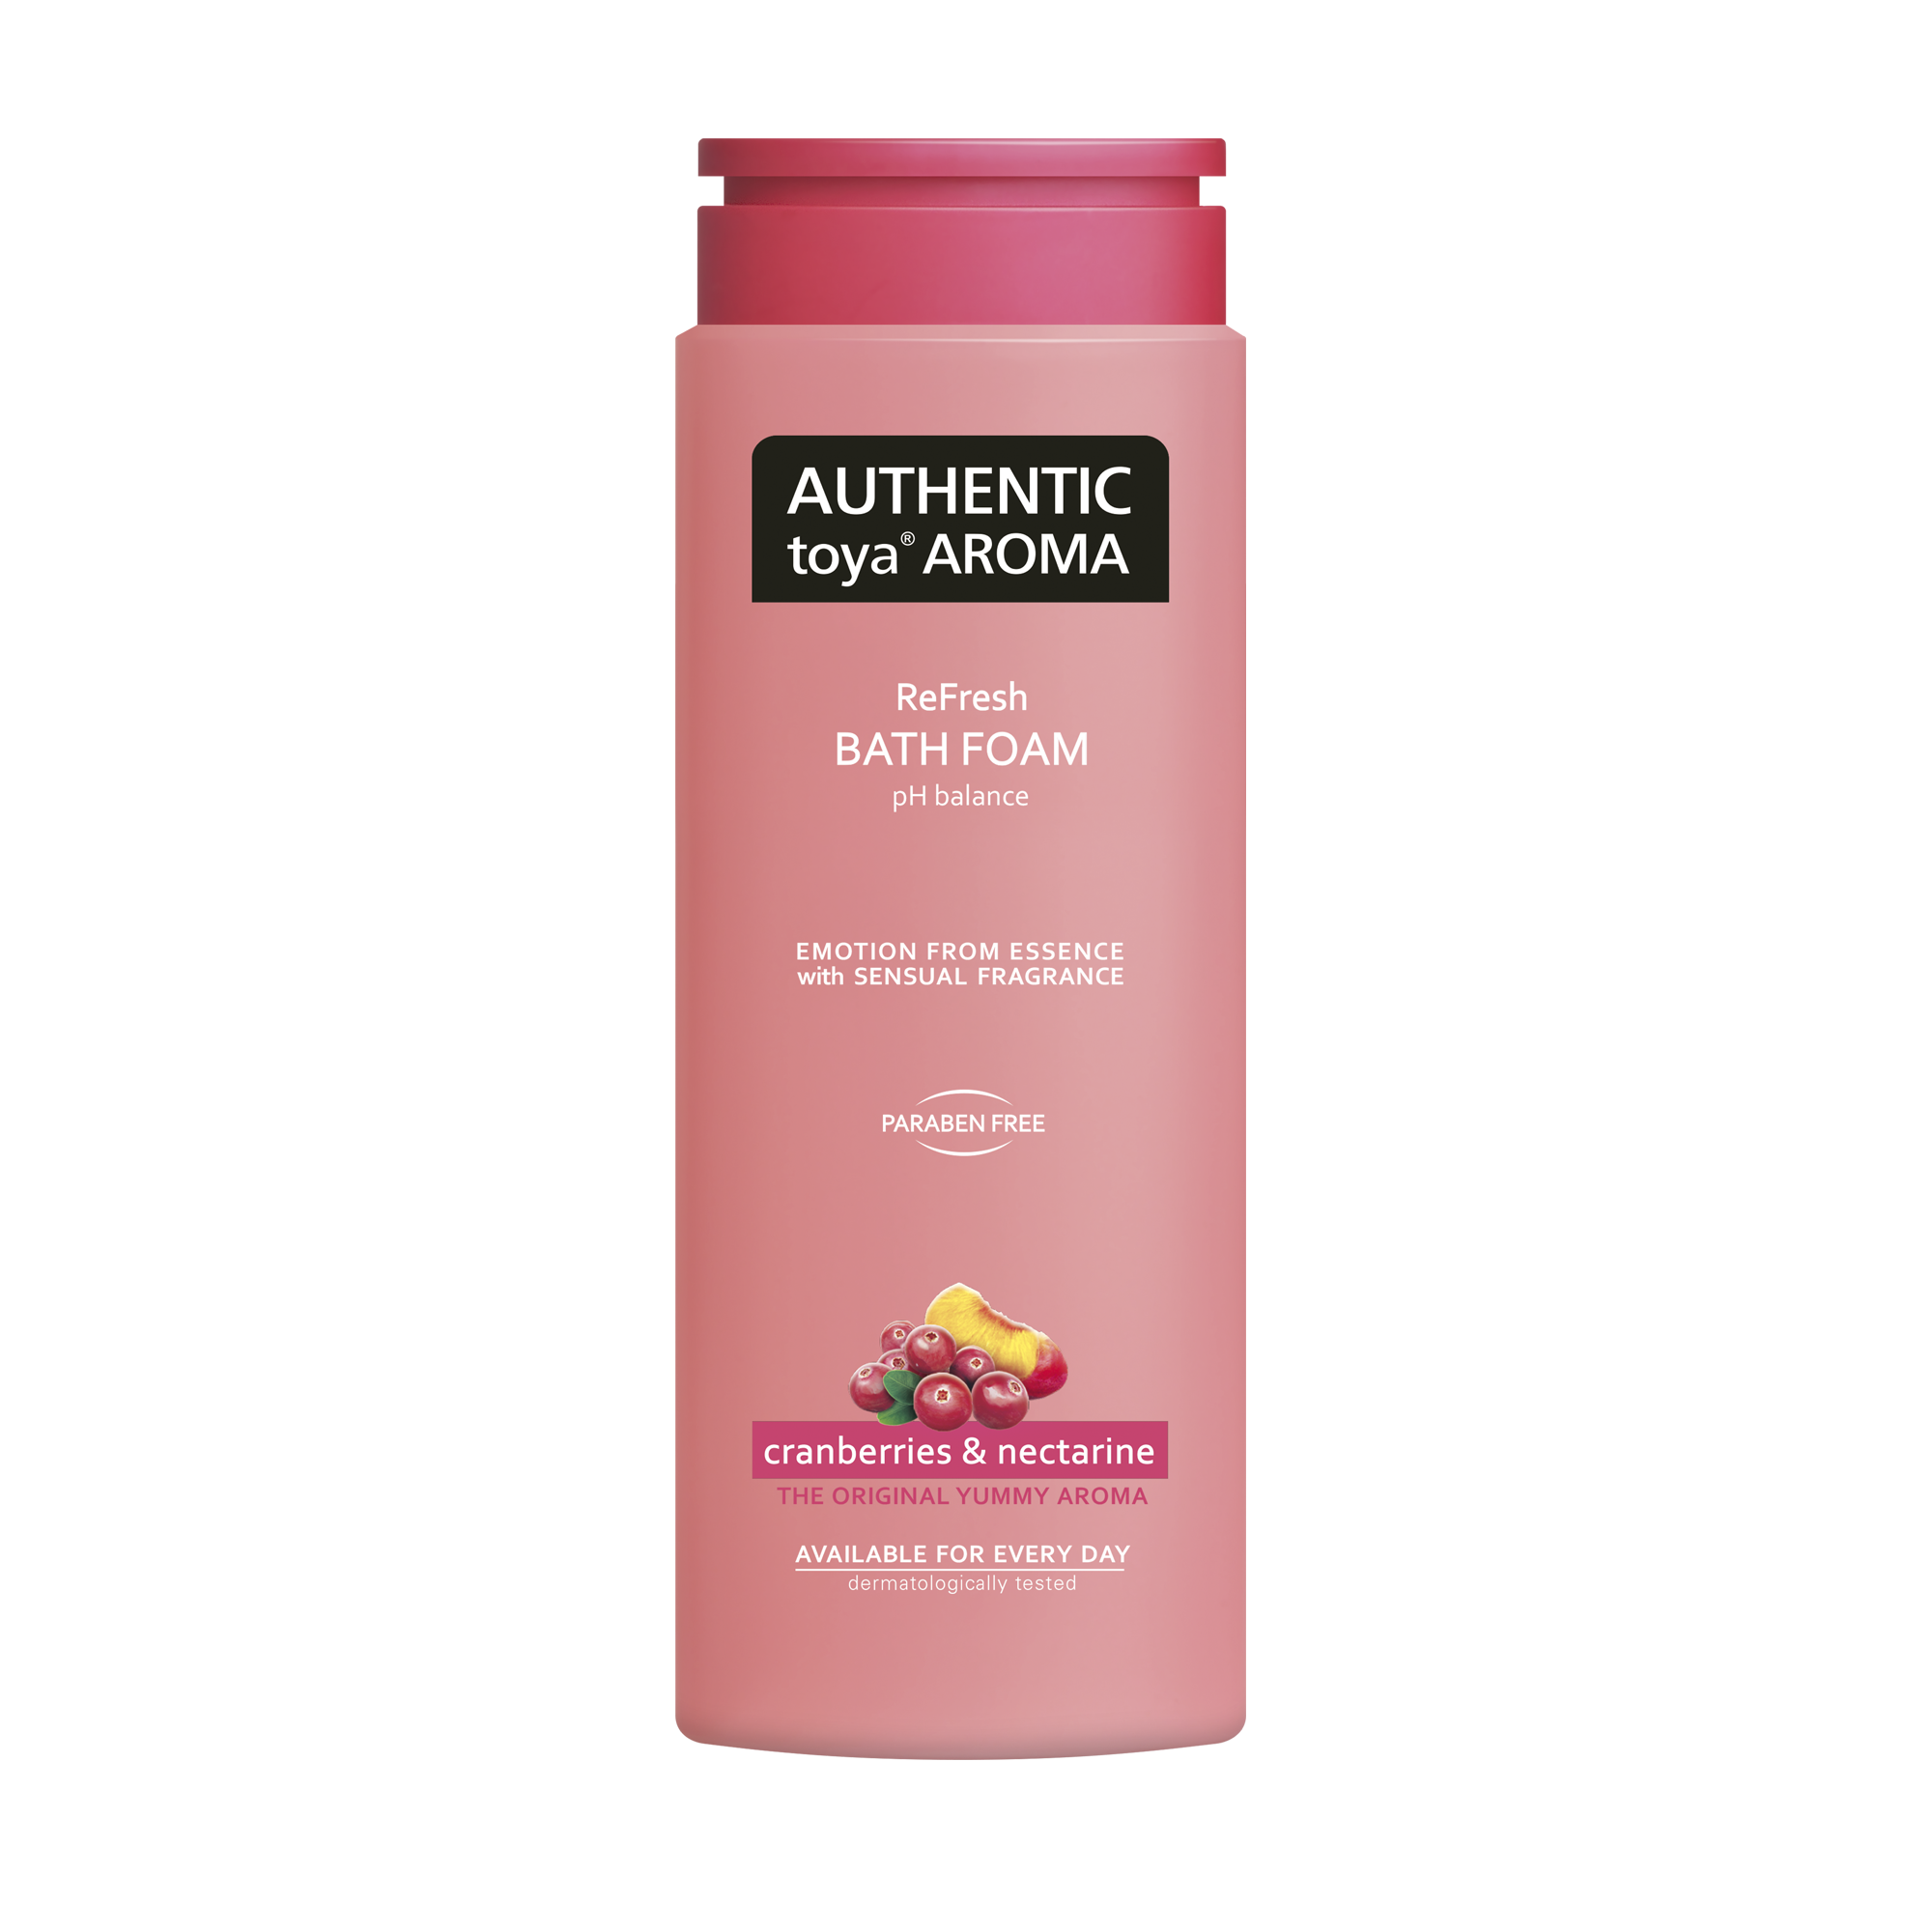 AUTHENTIC toya AROMA – pěna do koupele cranberries & nectarine